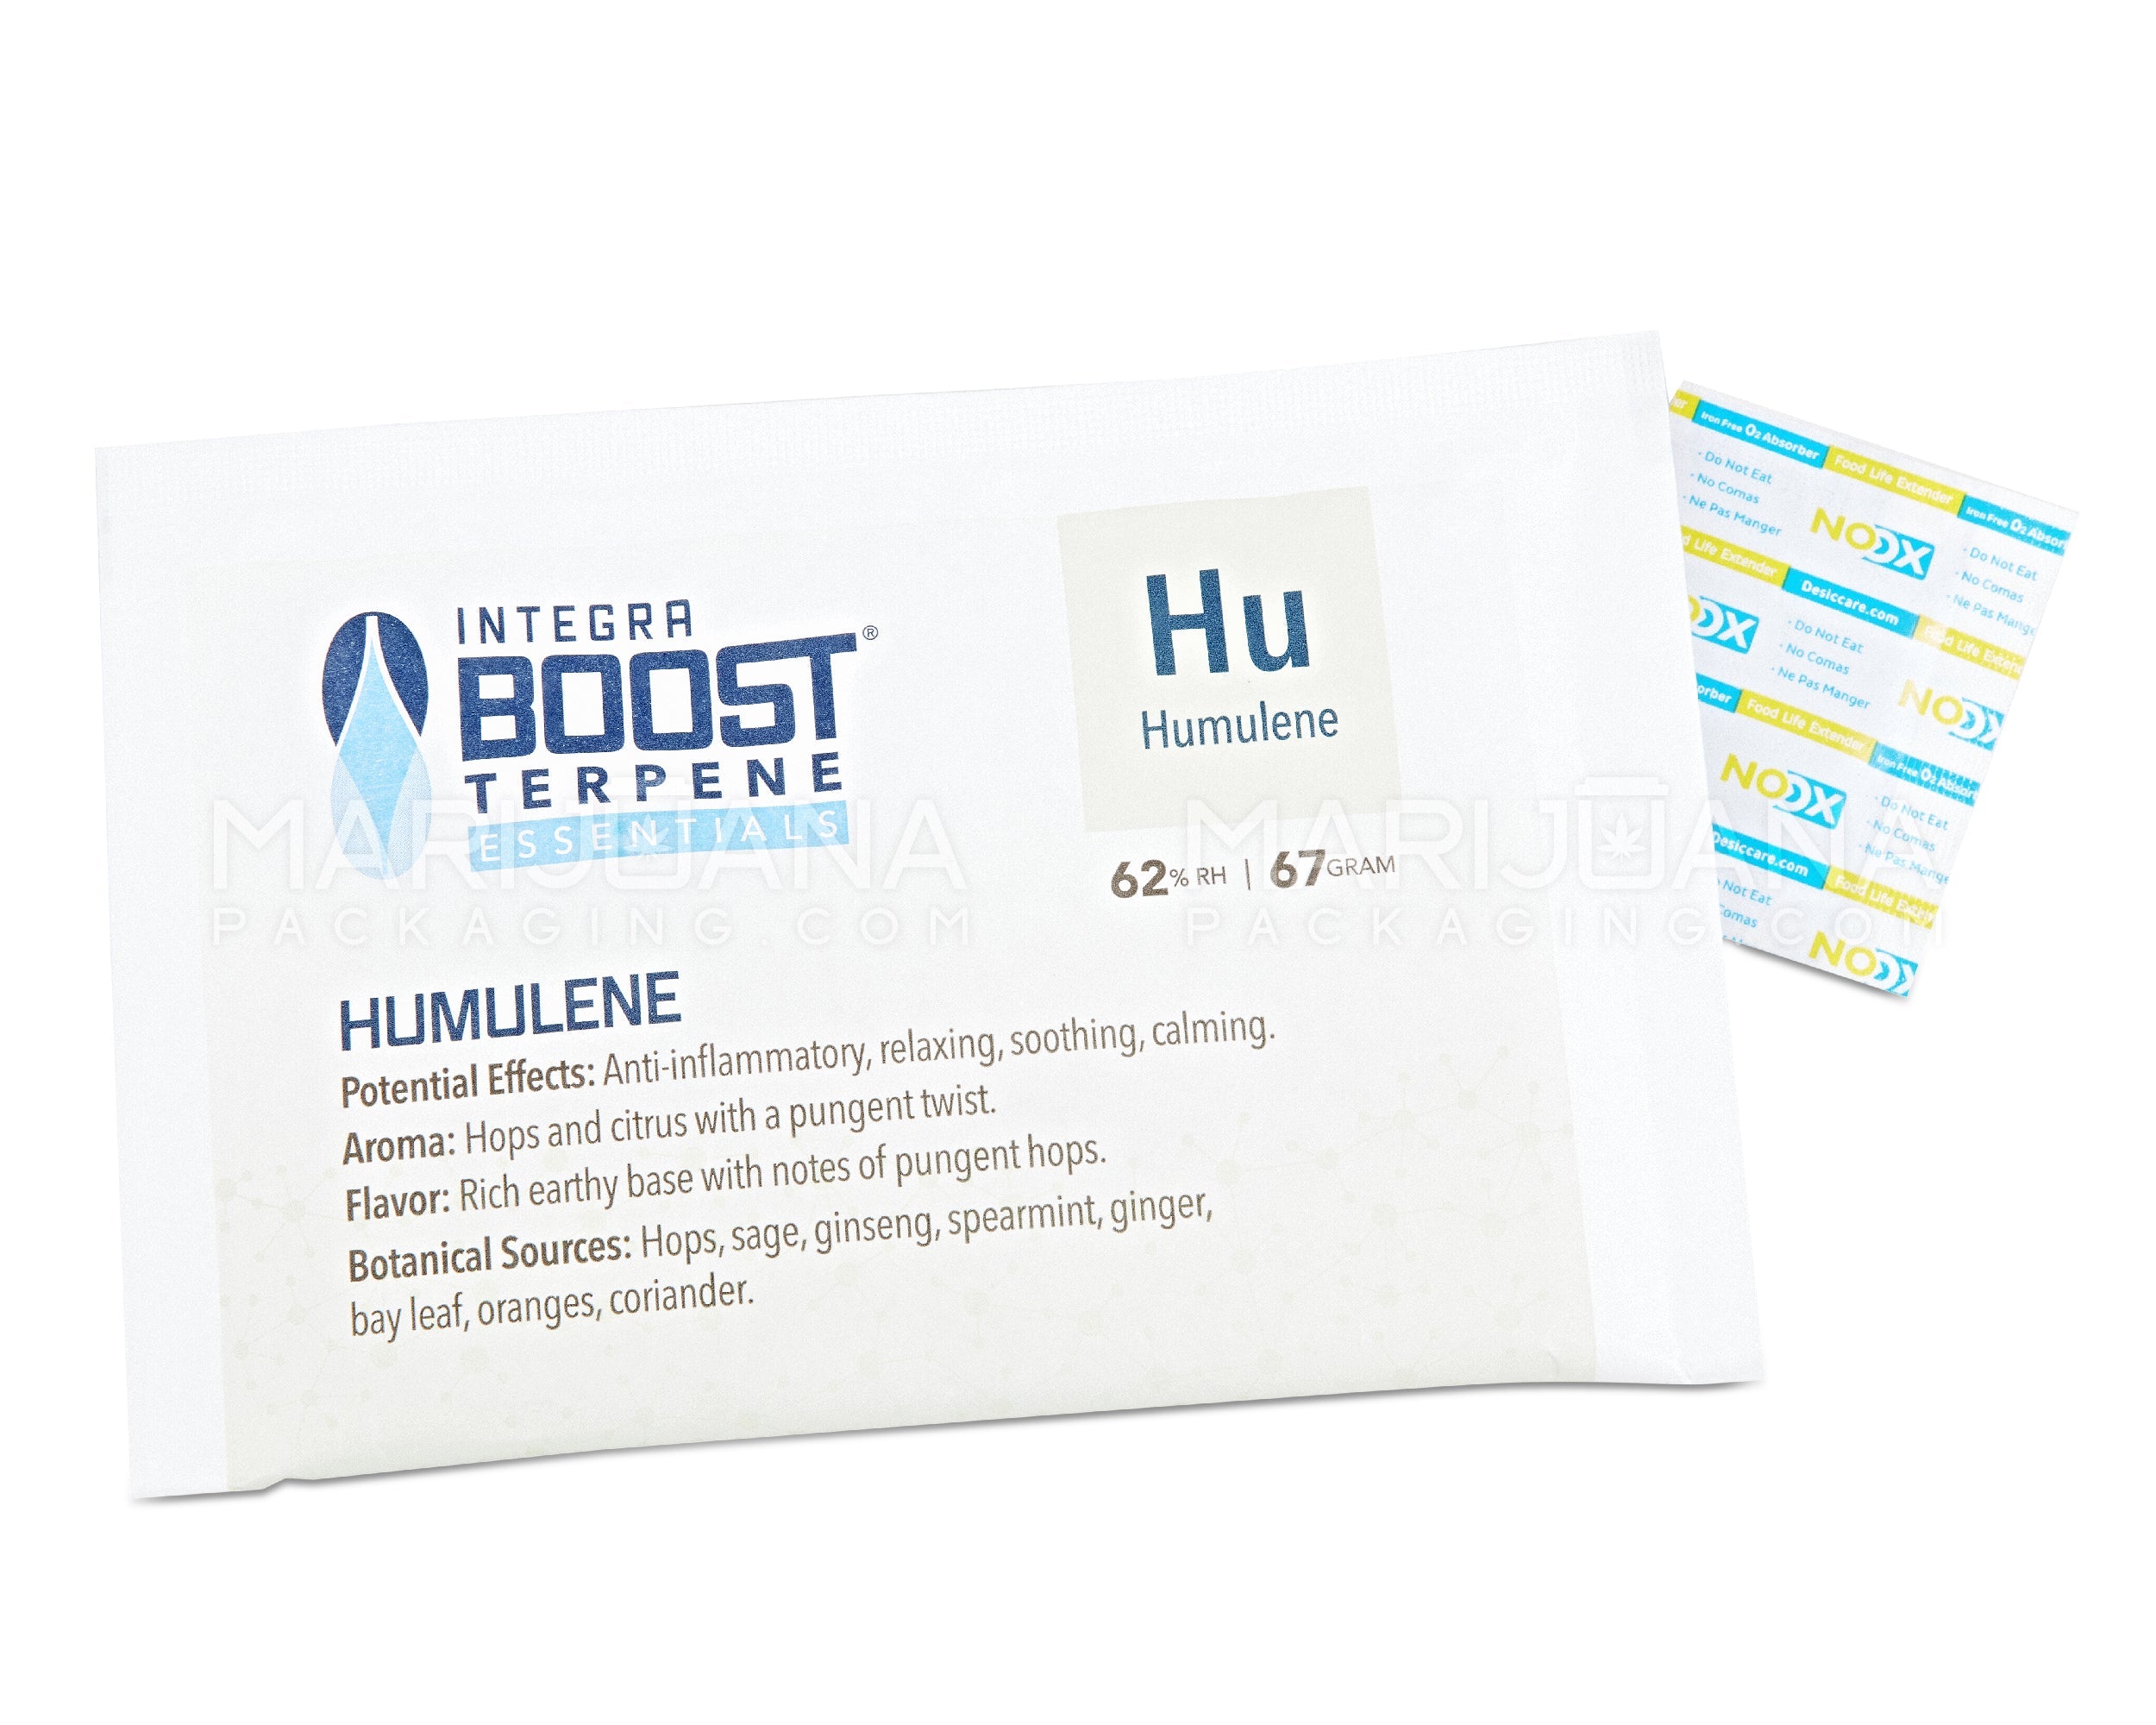 INTEGRA Boost Terpene Essentials Humulene Humidity Pack | 67 Grams - 62% | Sample - 3